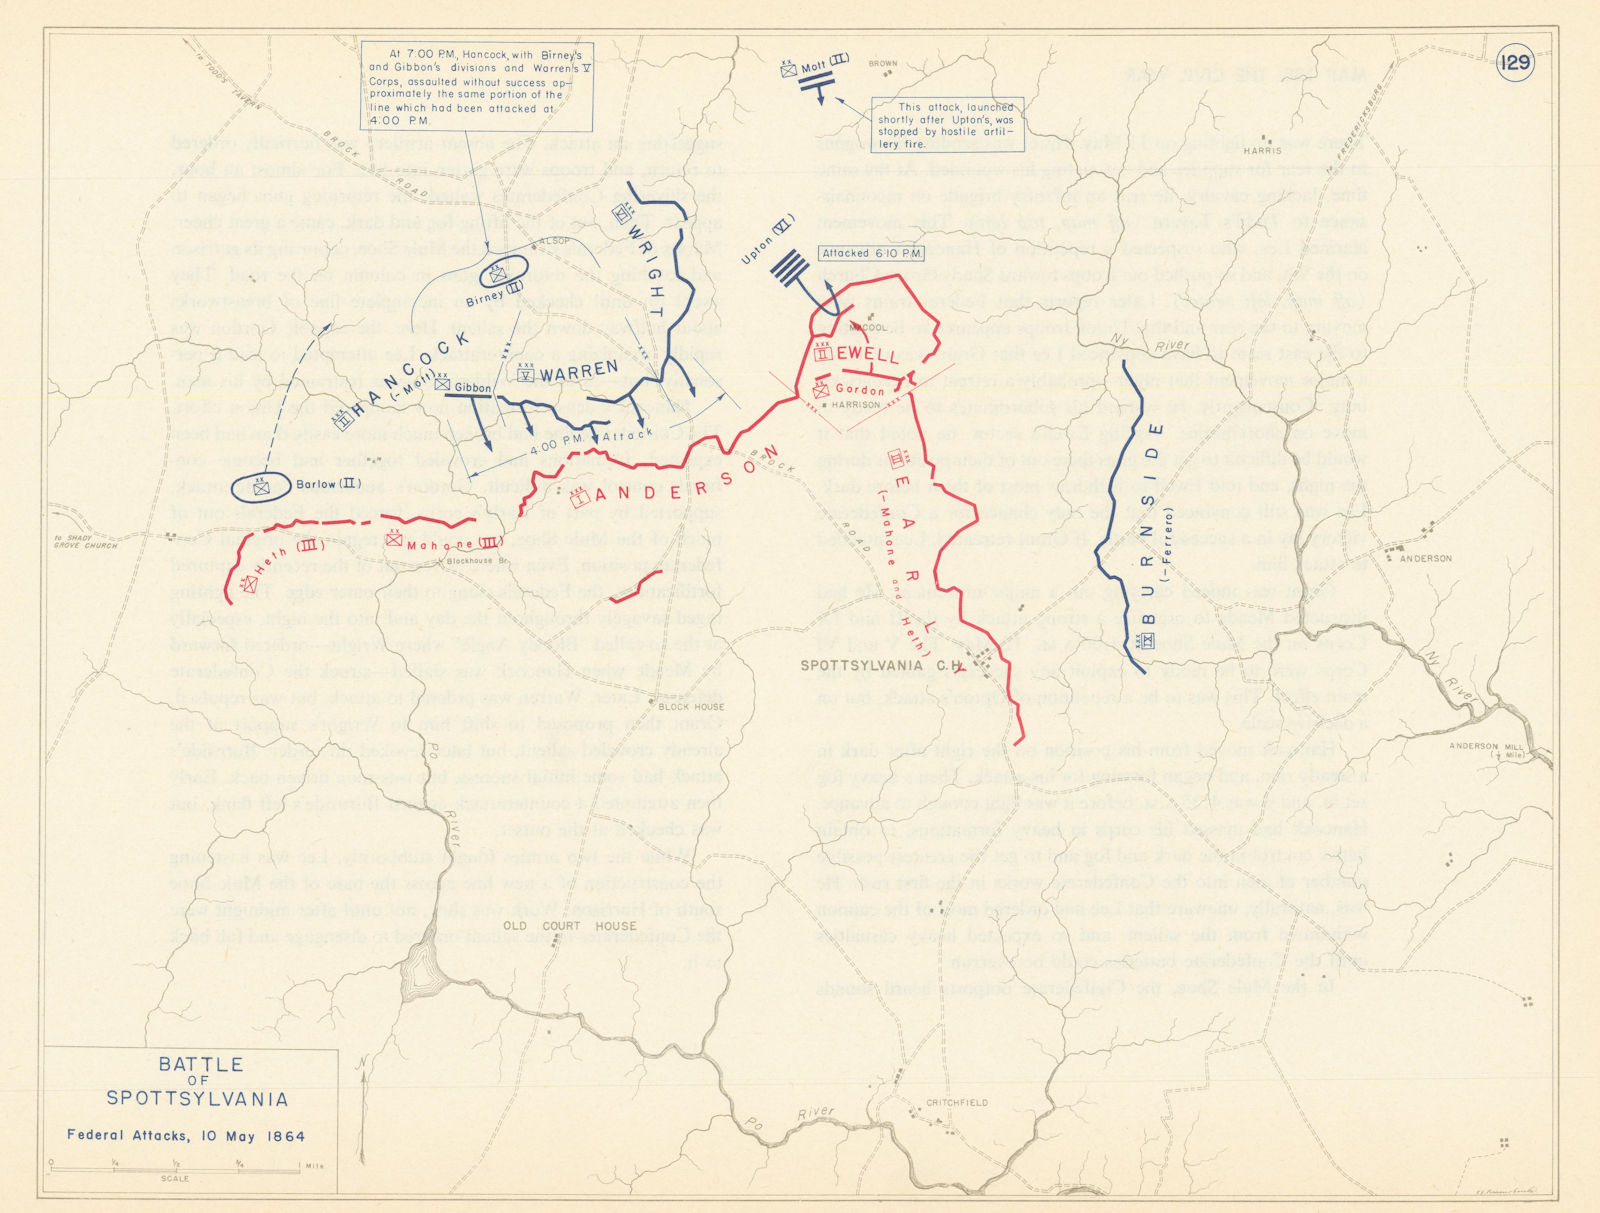 American Civil War. 10 May 1864 Battle of Spotsylvania. Federal Attacks 1959 map